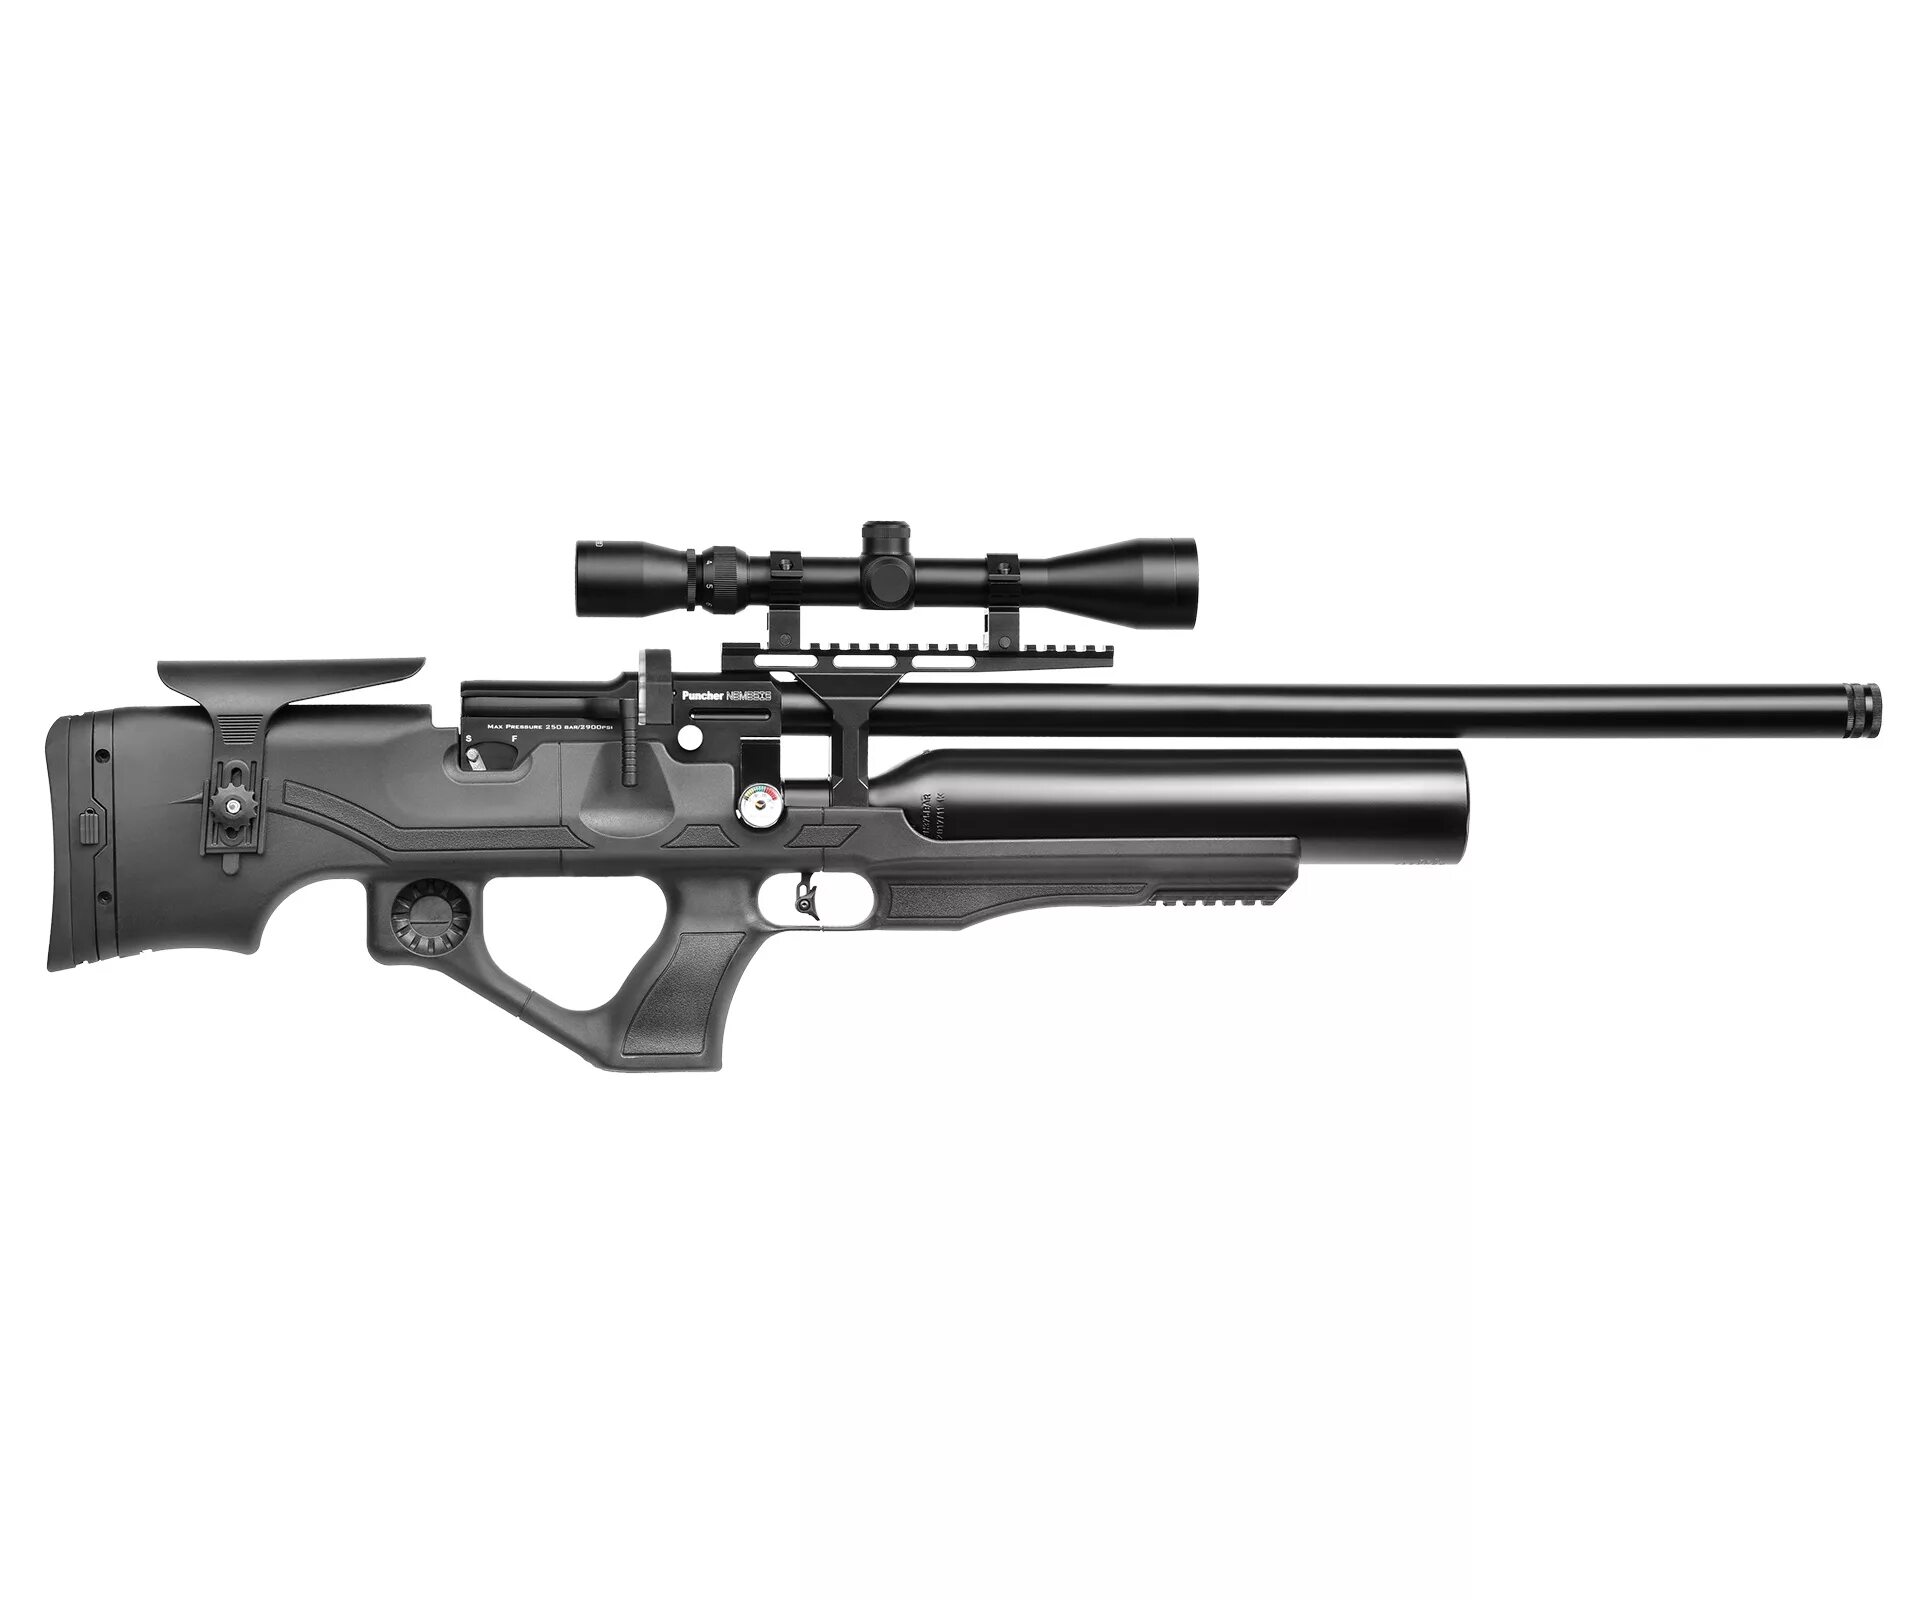 Пневматическая винтовка Kral Puncher Maxi s (пластик, PCP, 3 Дж) 6,35 мм. PCP винтовка Kral Puncher Maxi 3. Kral PCP 6.35. Пневматическая винтовка Kral Puncher Maxi 3 5,5 мм (PCP, пластик). Крал пинчер